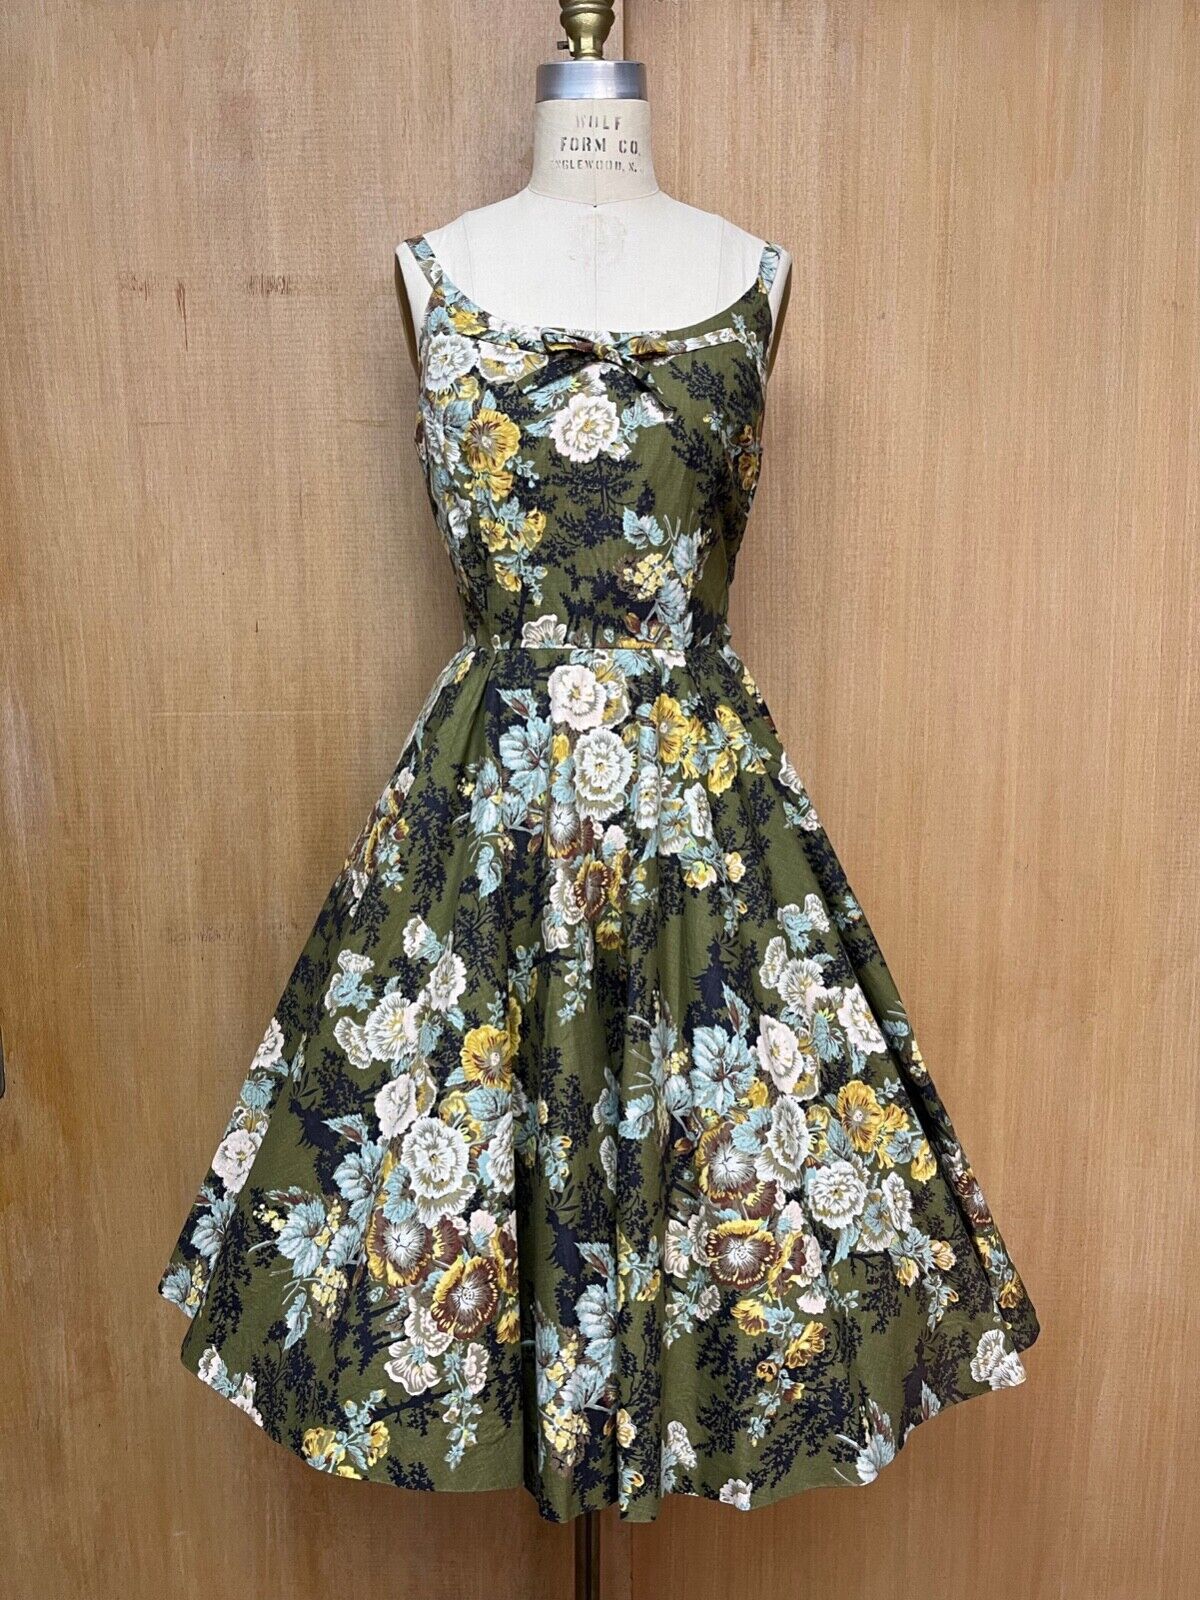 Vintage 1950s Floral Sundress Dress Circle Skirt Summer Cotton Swing Homemade S